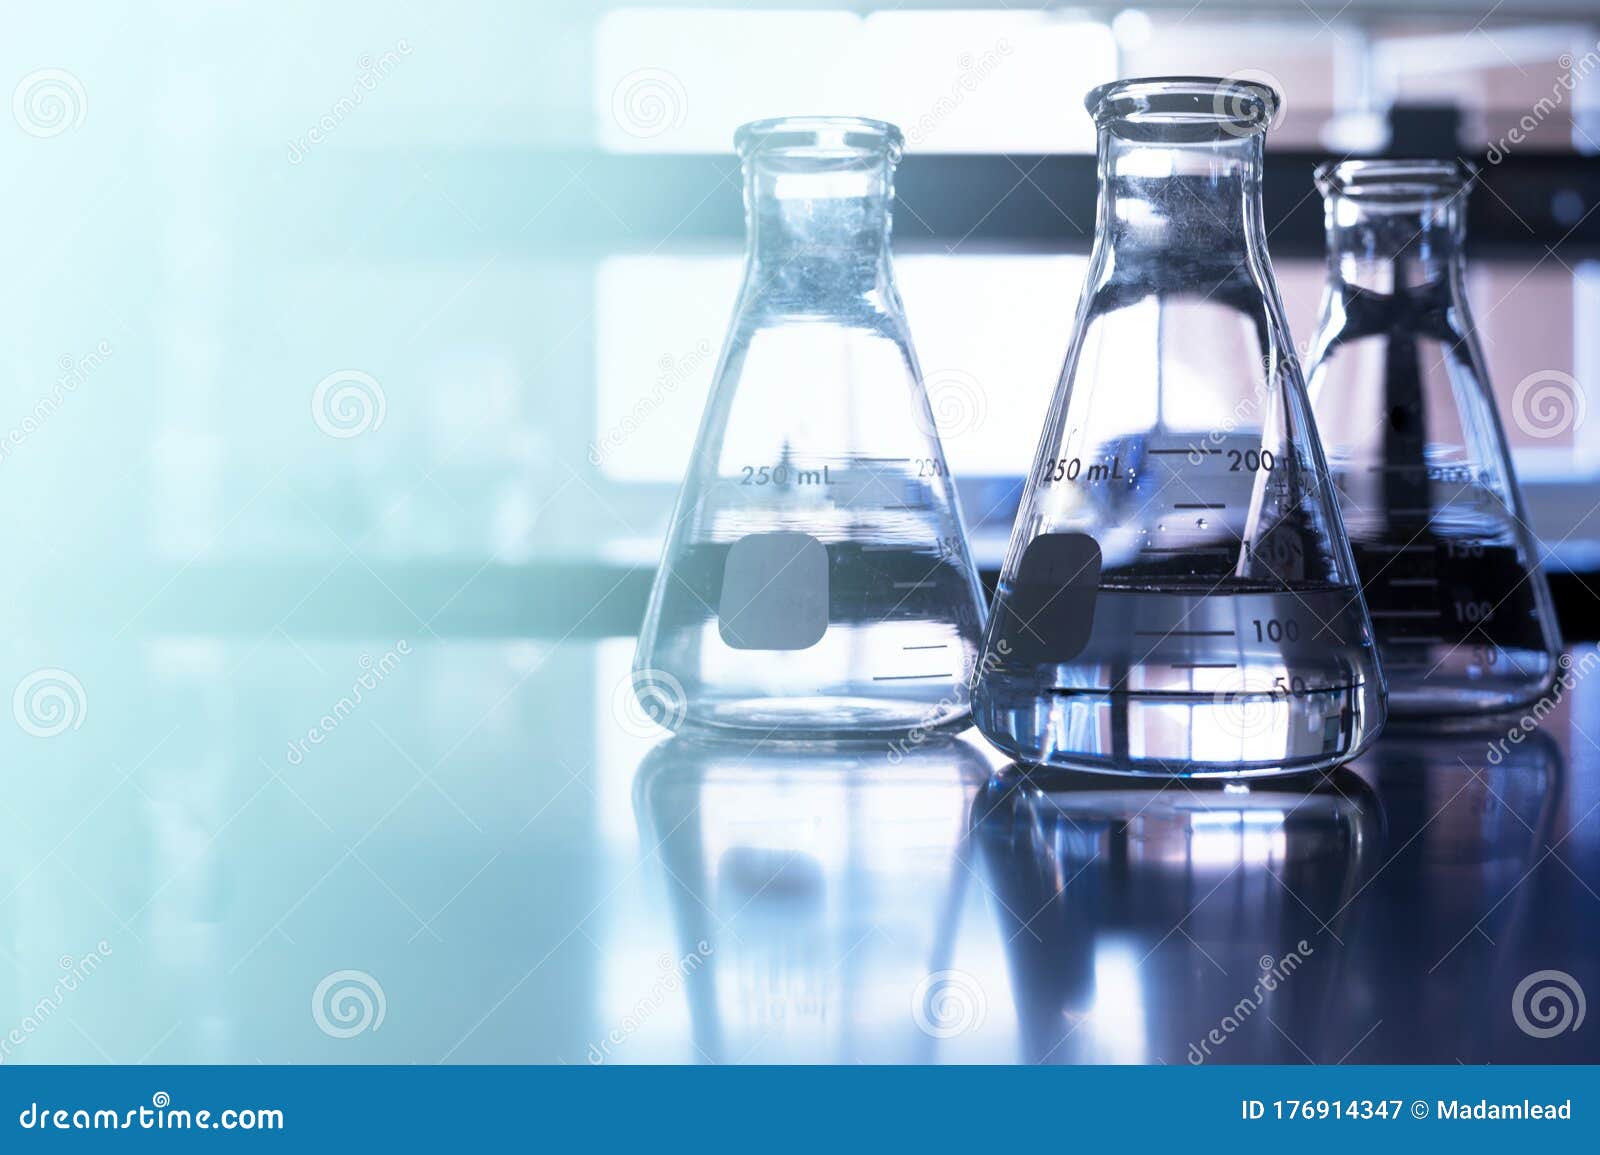 На столе стоят три склянки с водой. AG Chemistry. Perfect Testing Laboratoria background image.